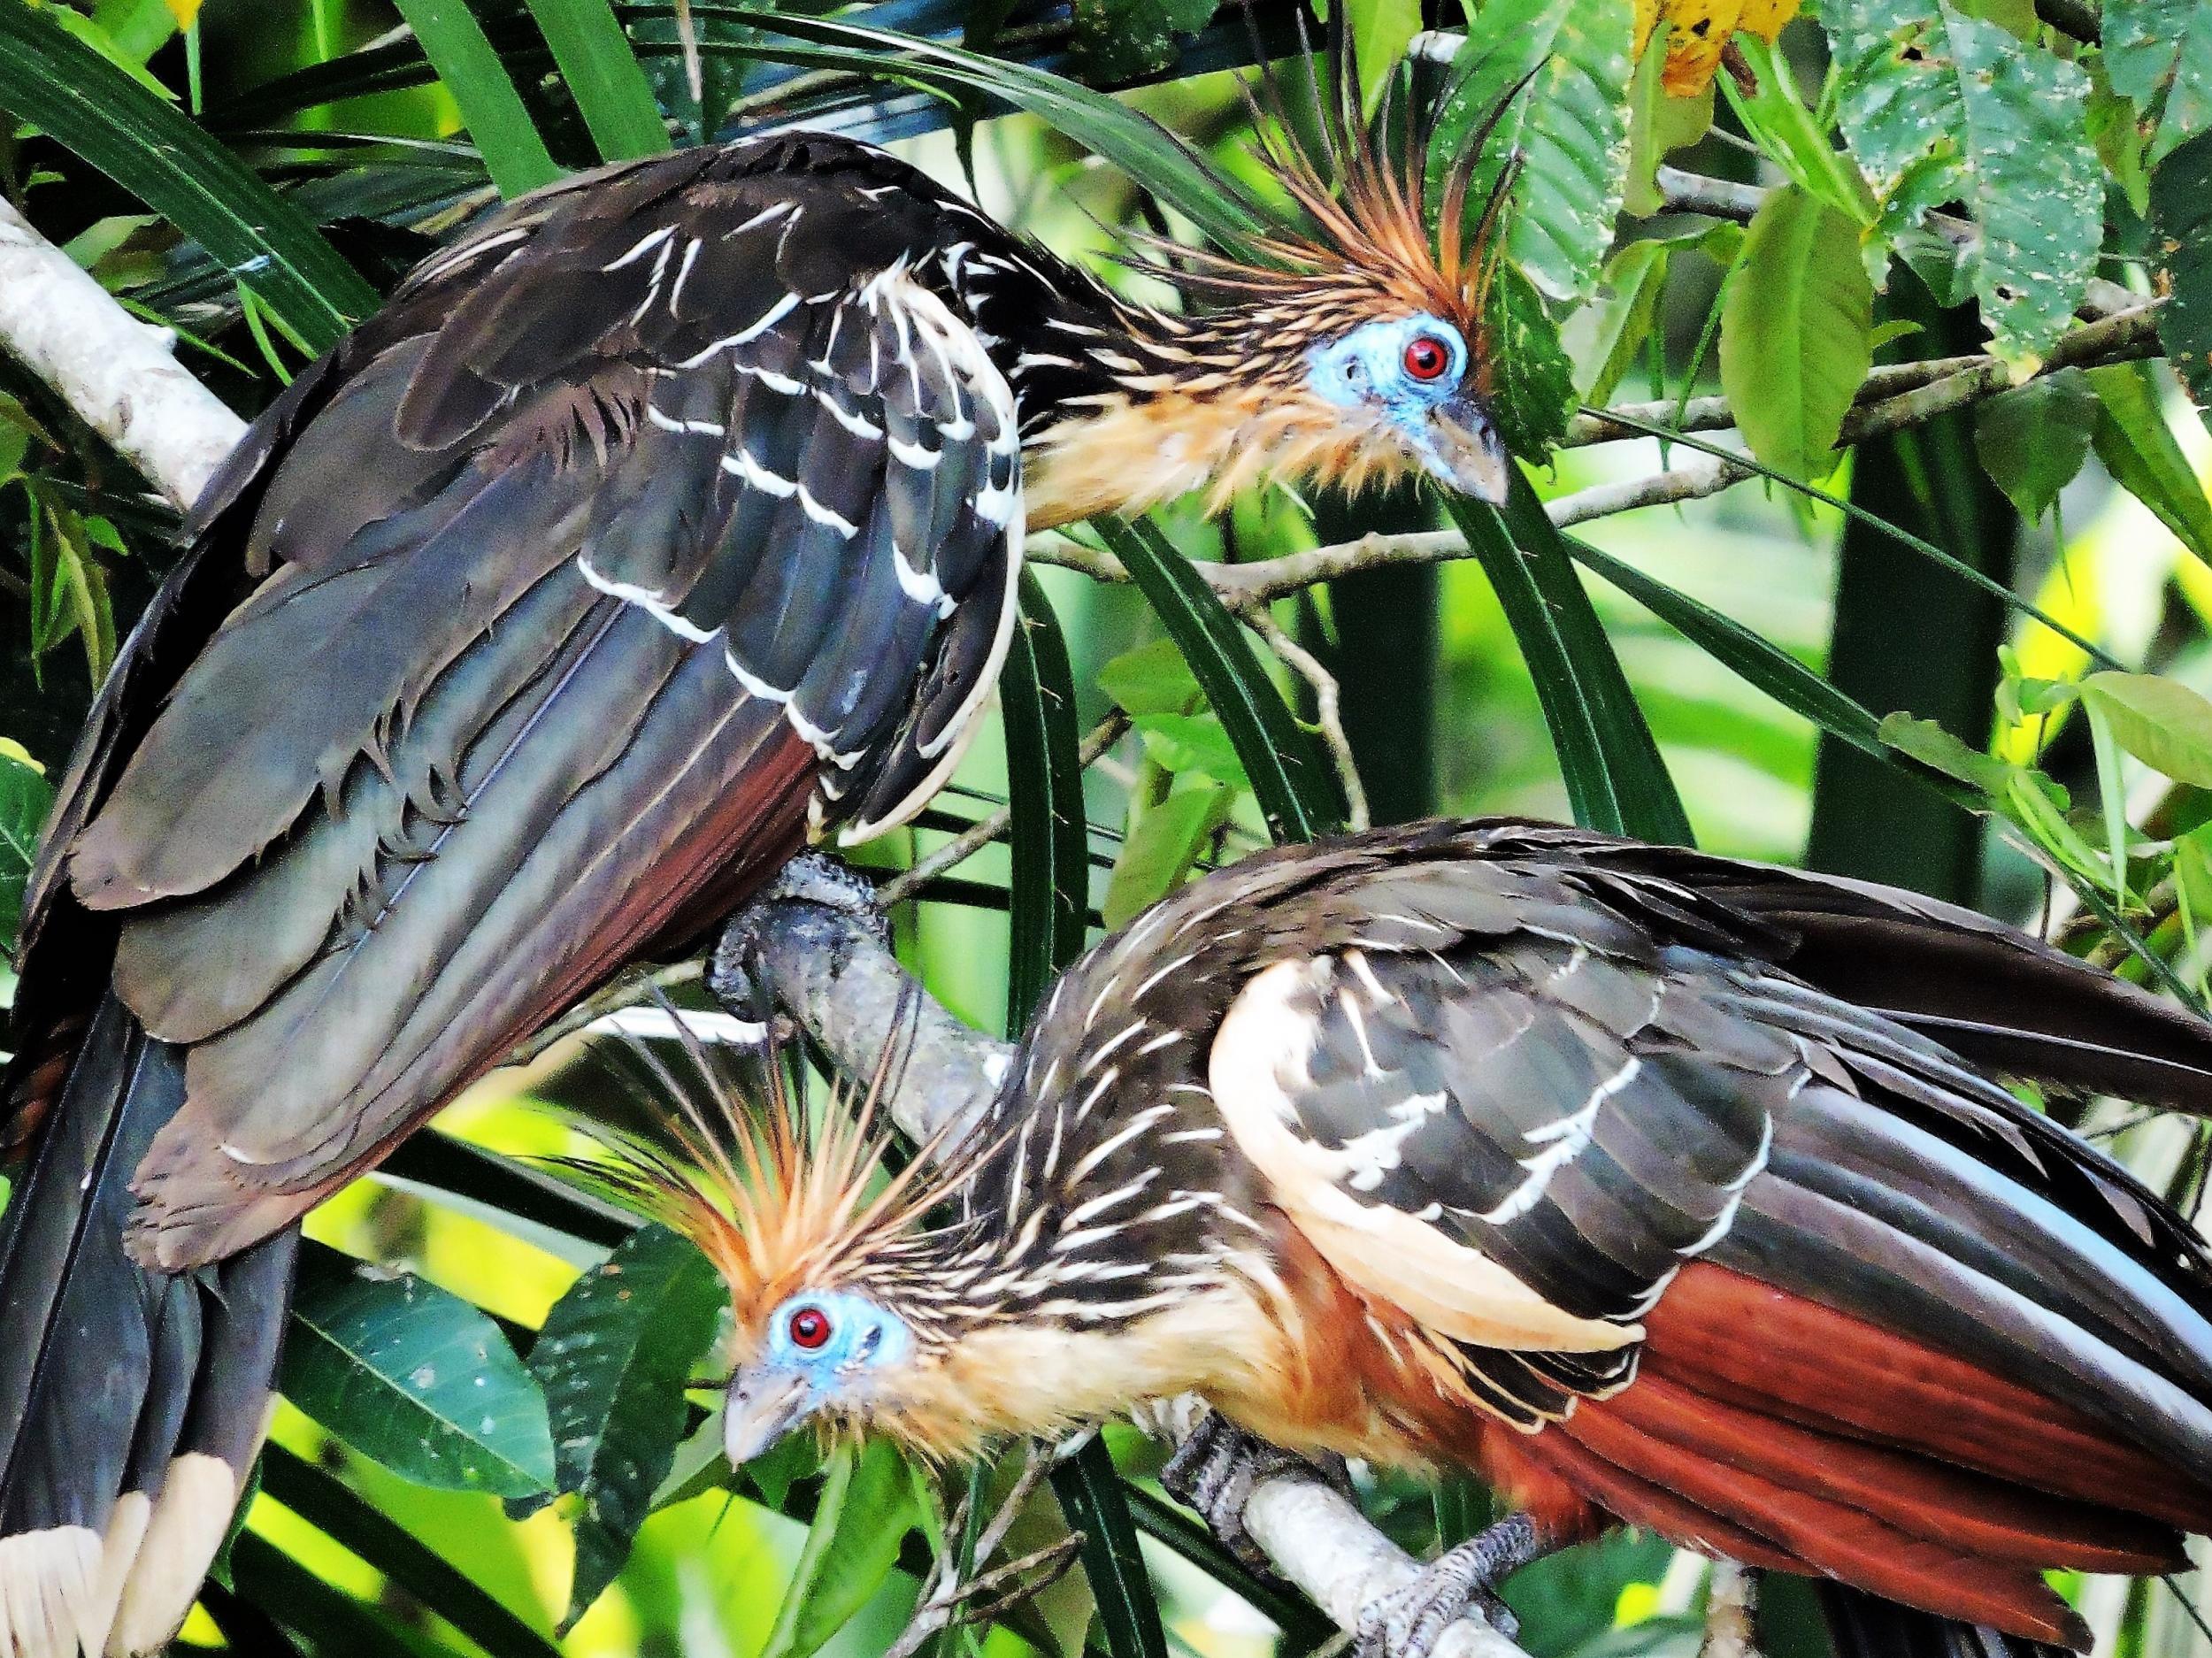 The Madidi jungle boasts incredible biodiversity